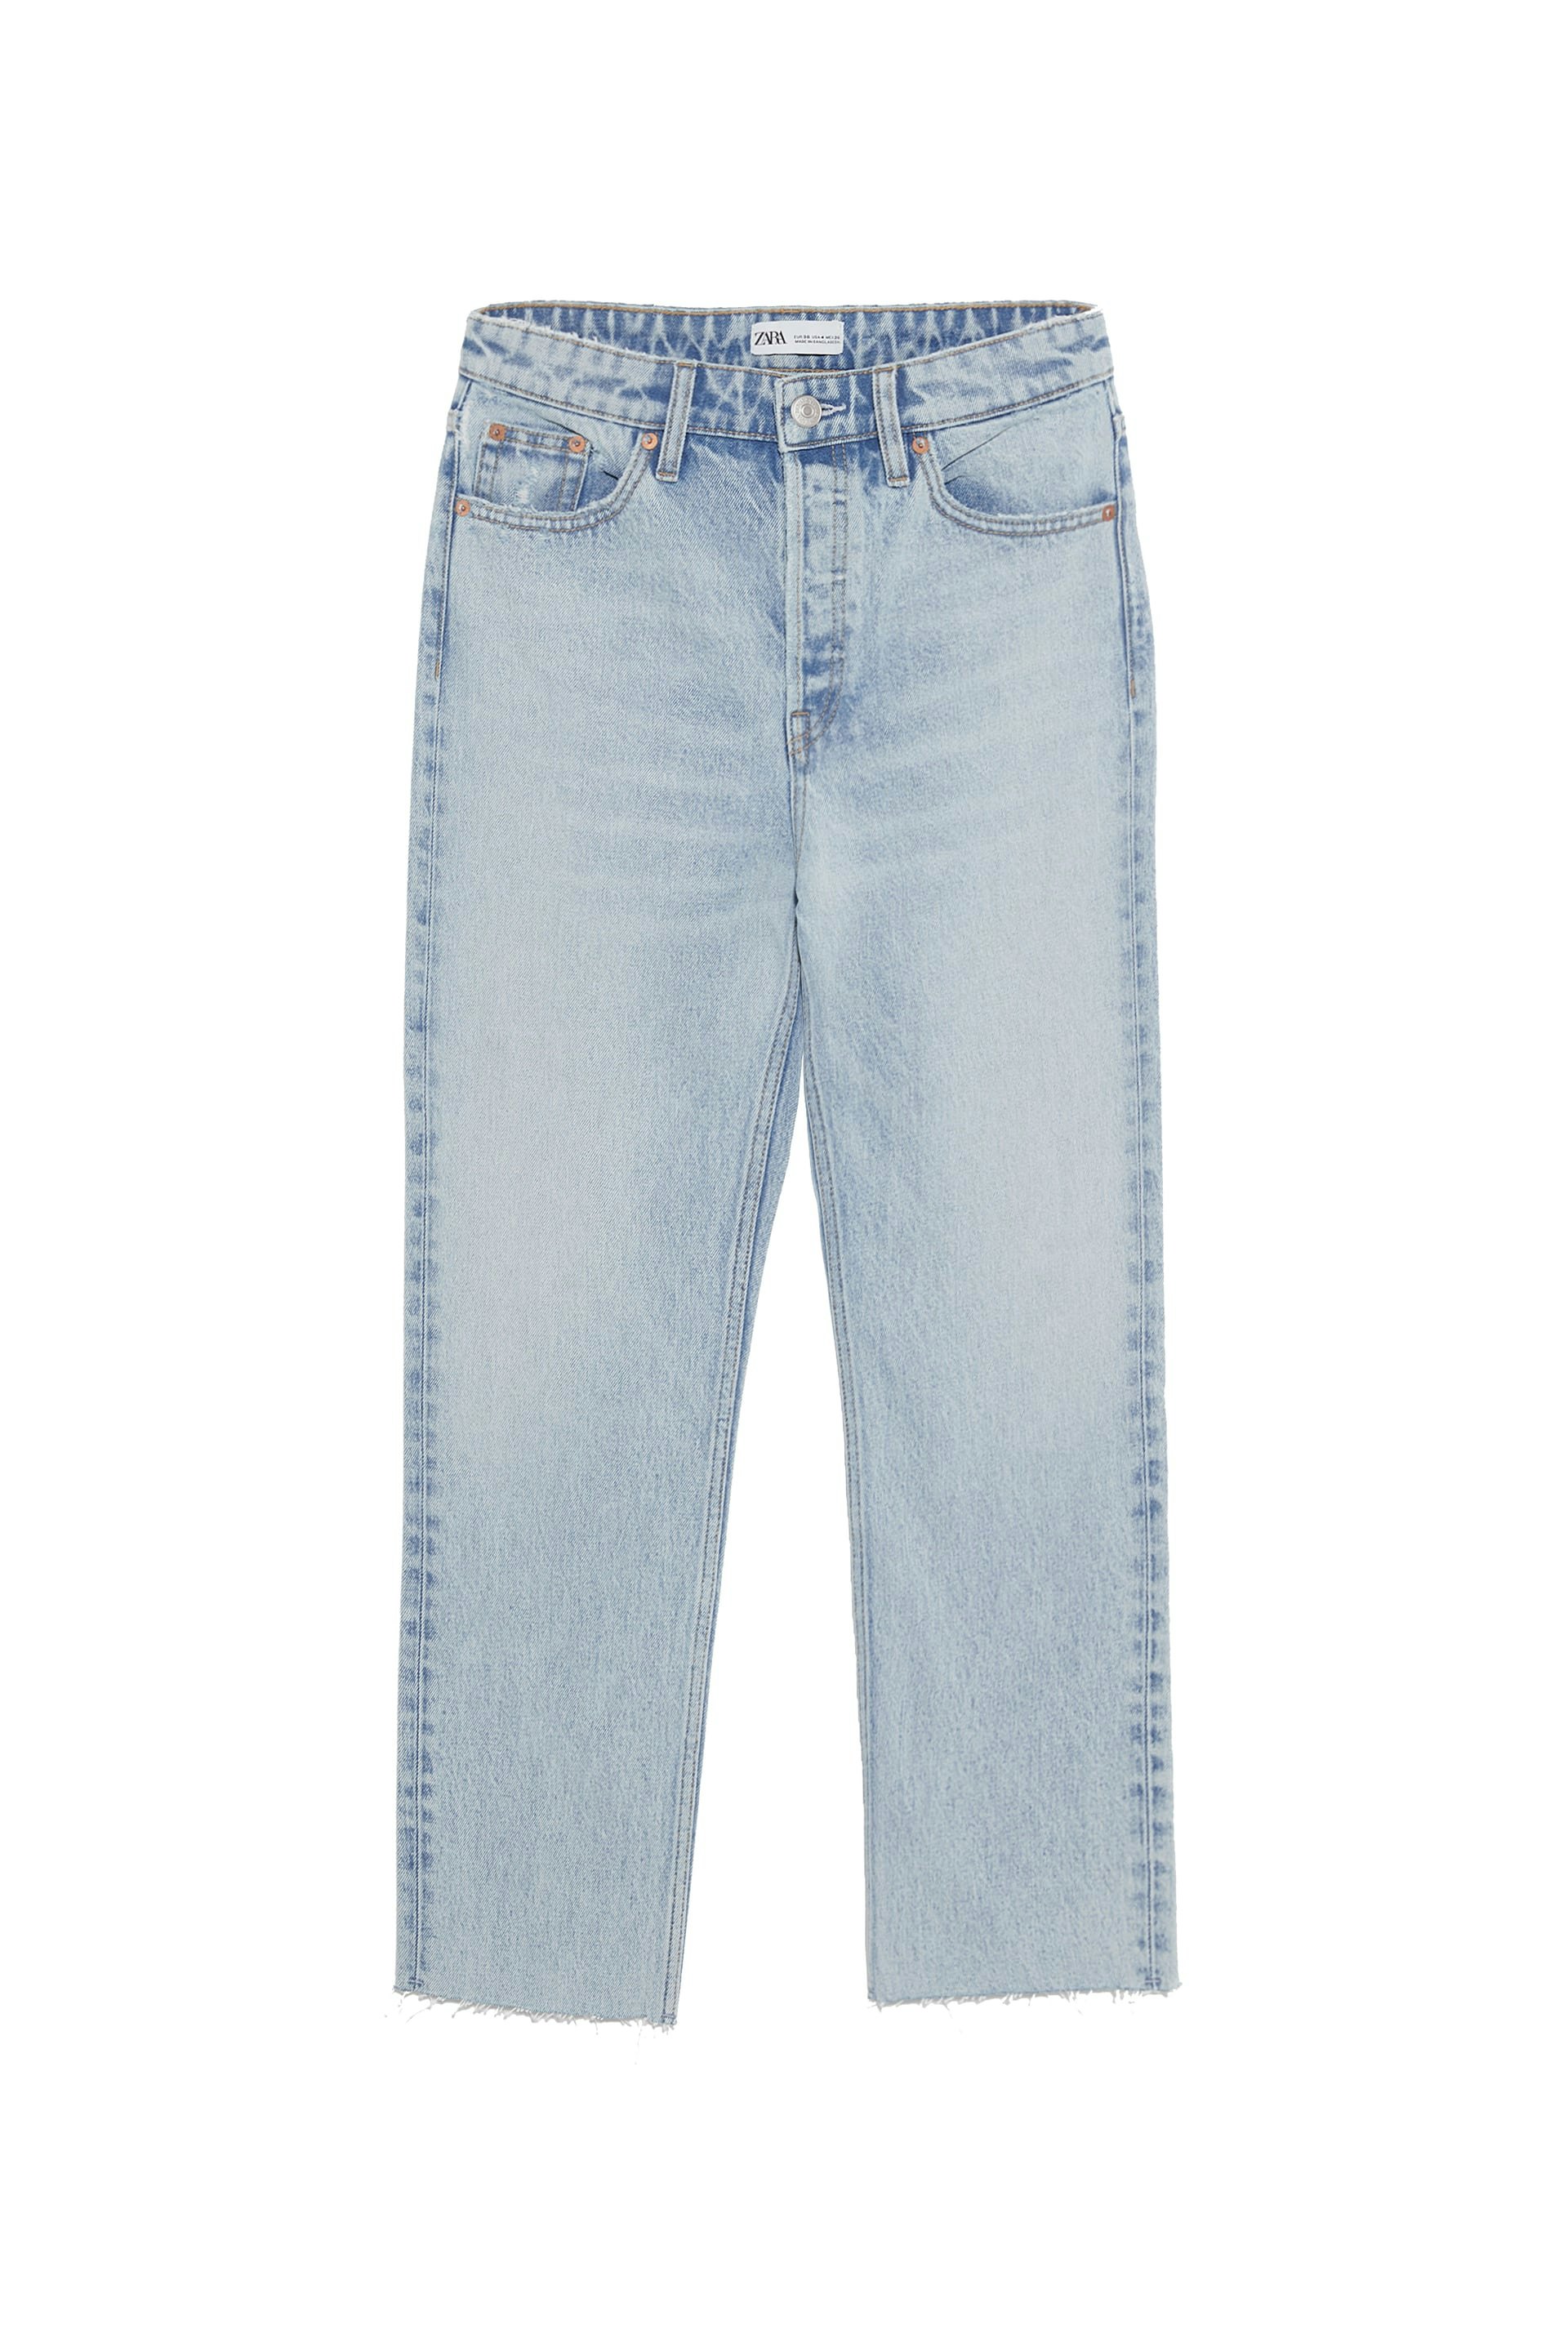 jeans mid rise essential zara